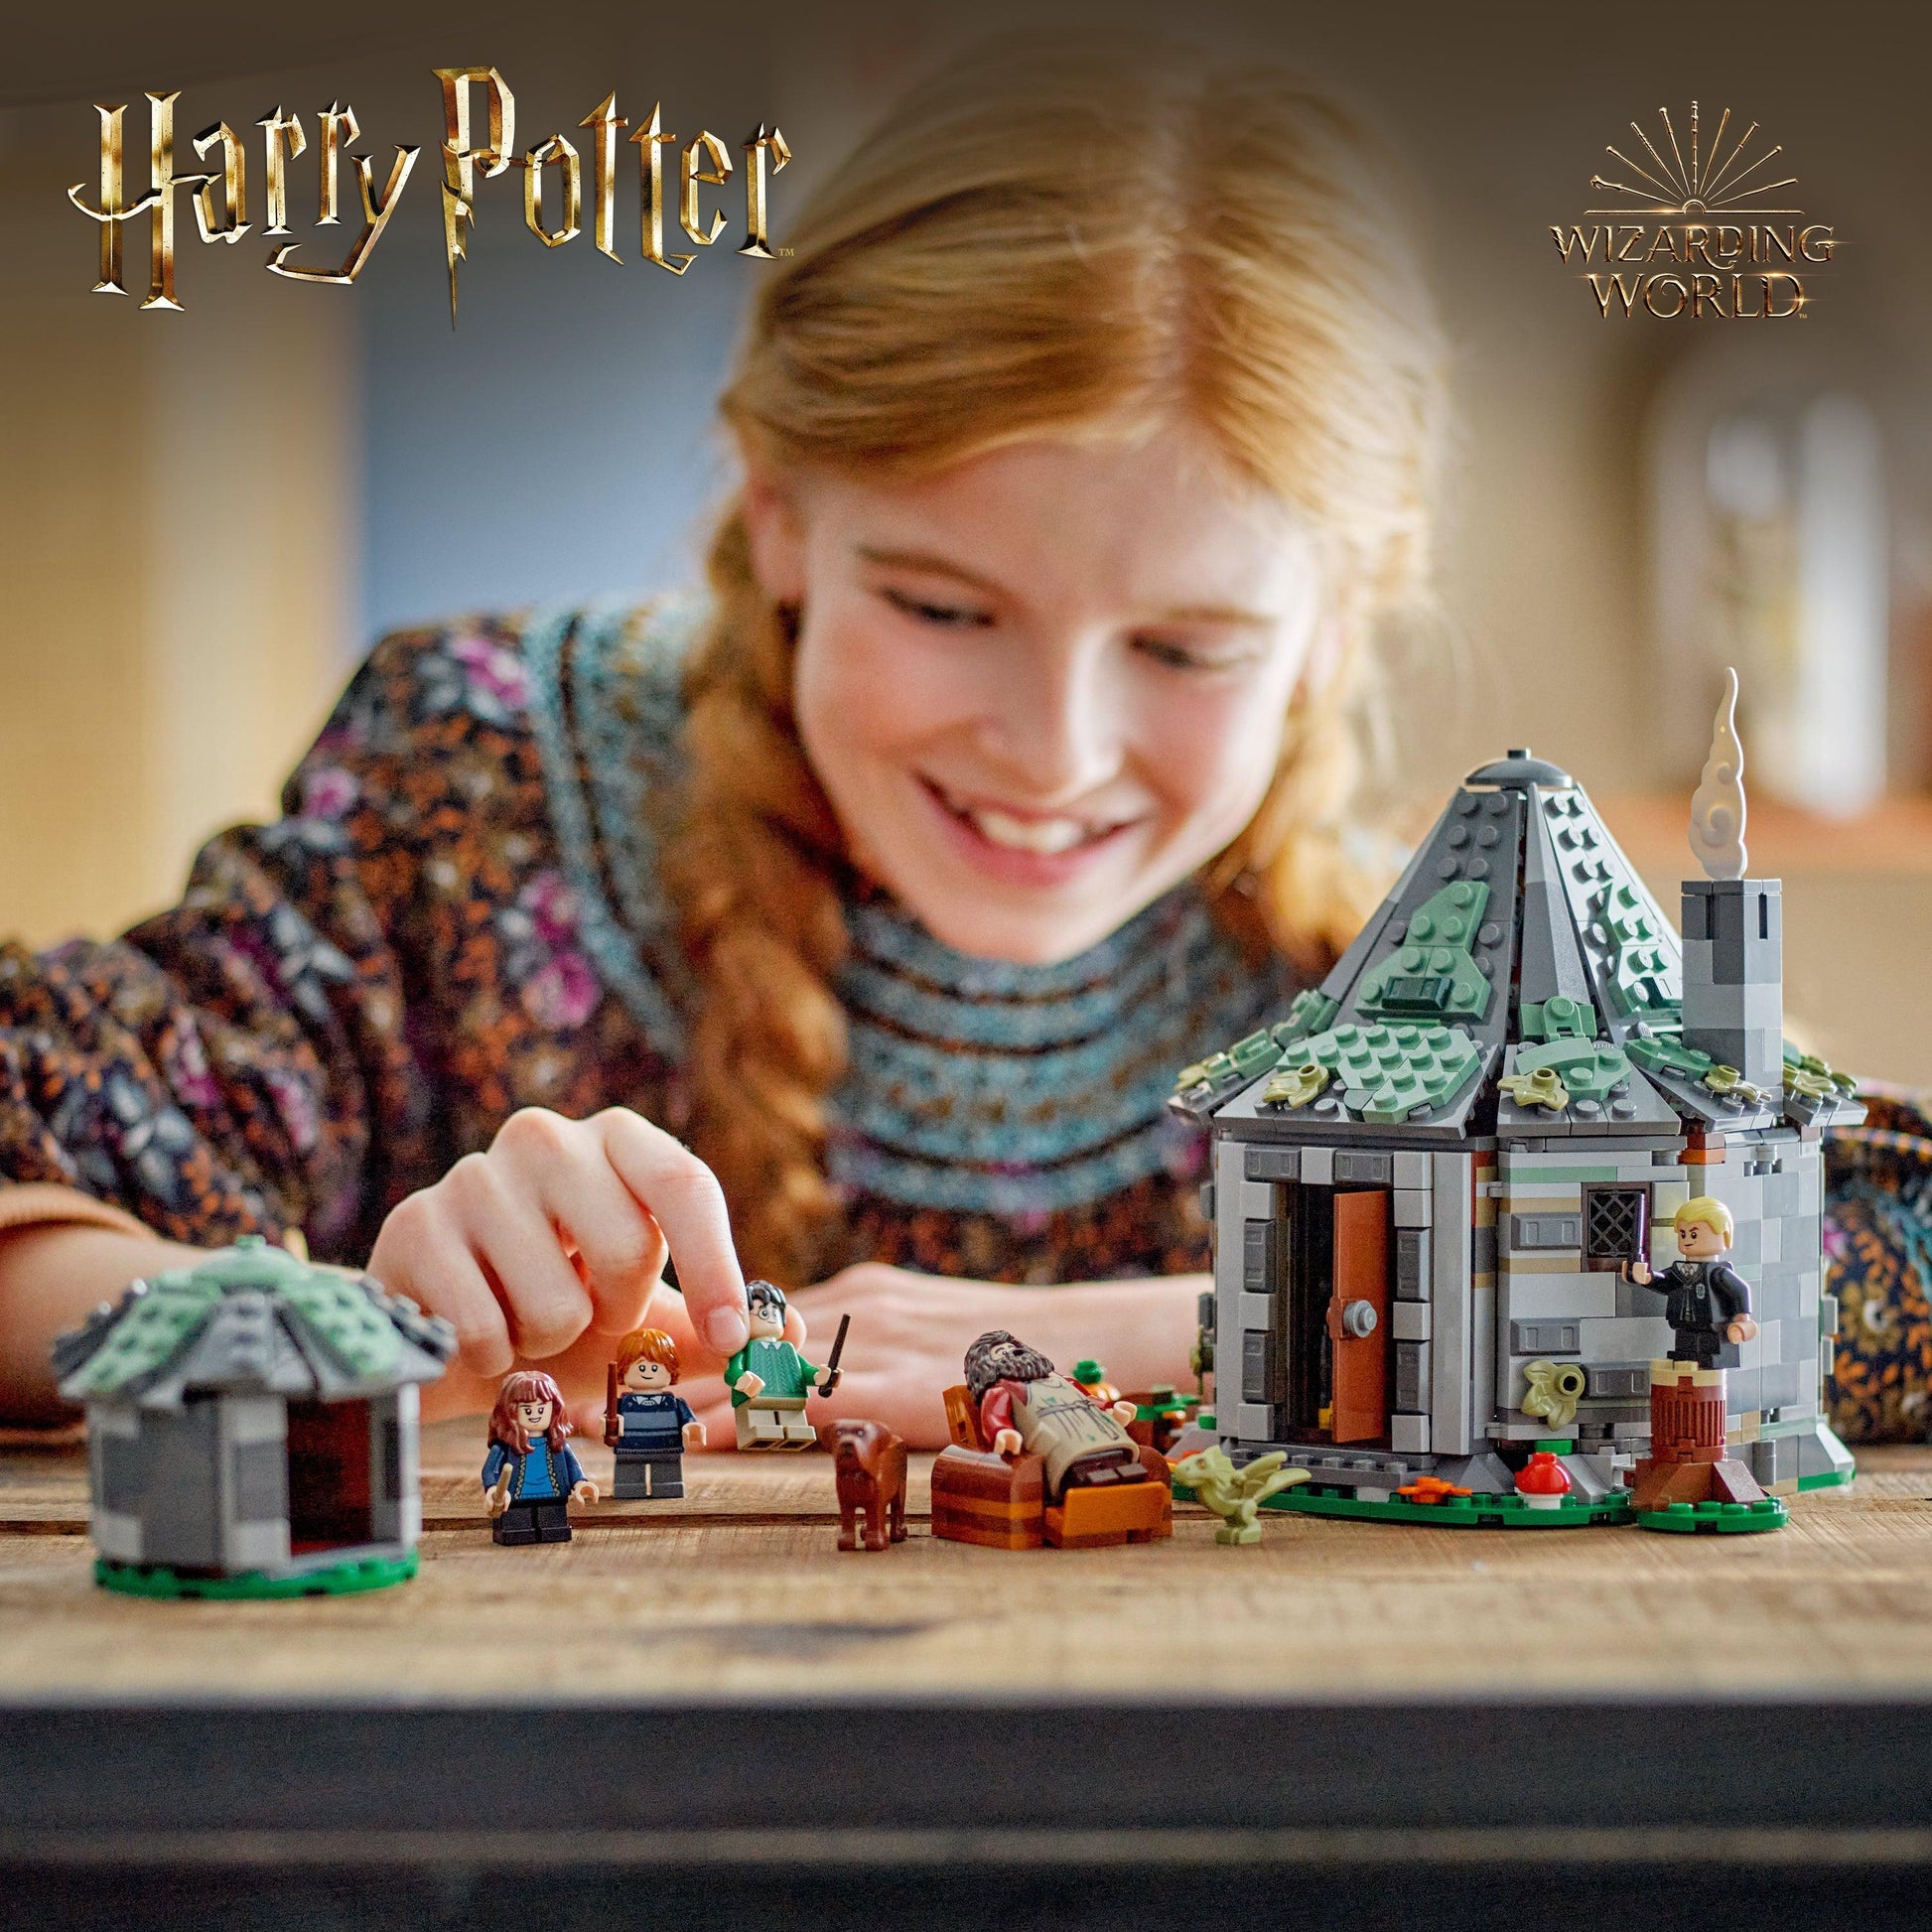 LEGO Hagrids huisje: onverwacht bezoek 76428 Harry Potter | 2TTOYS ✓ Official shop<br>